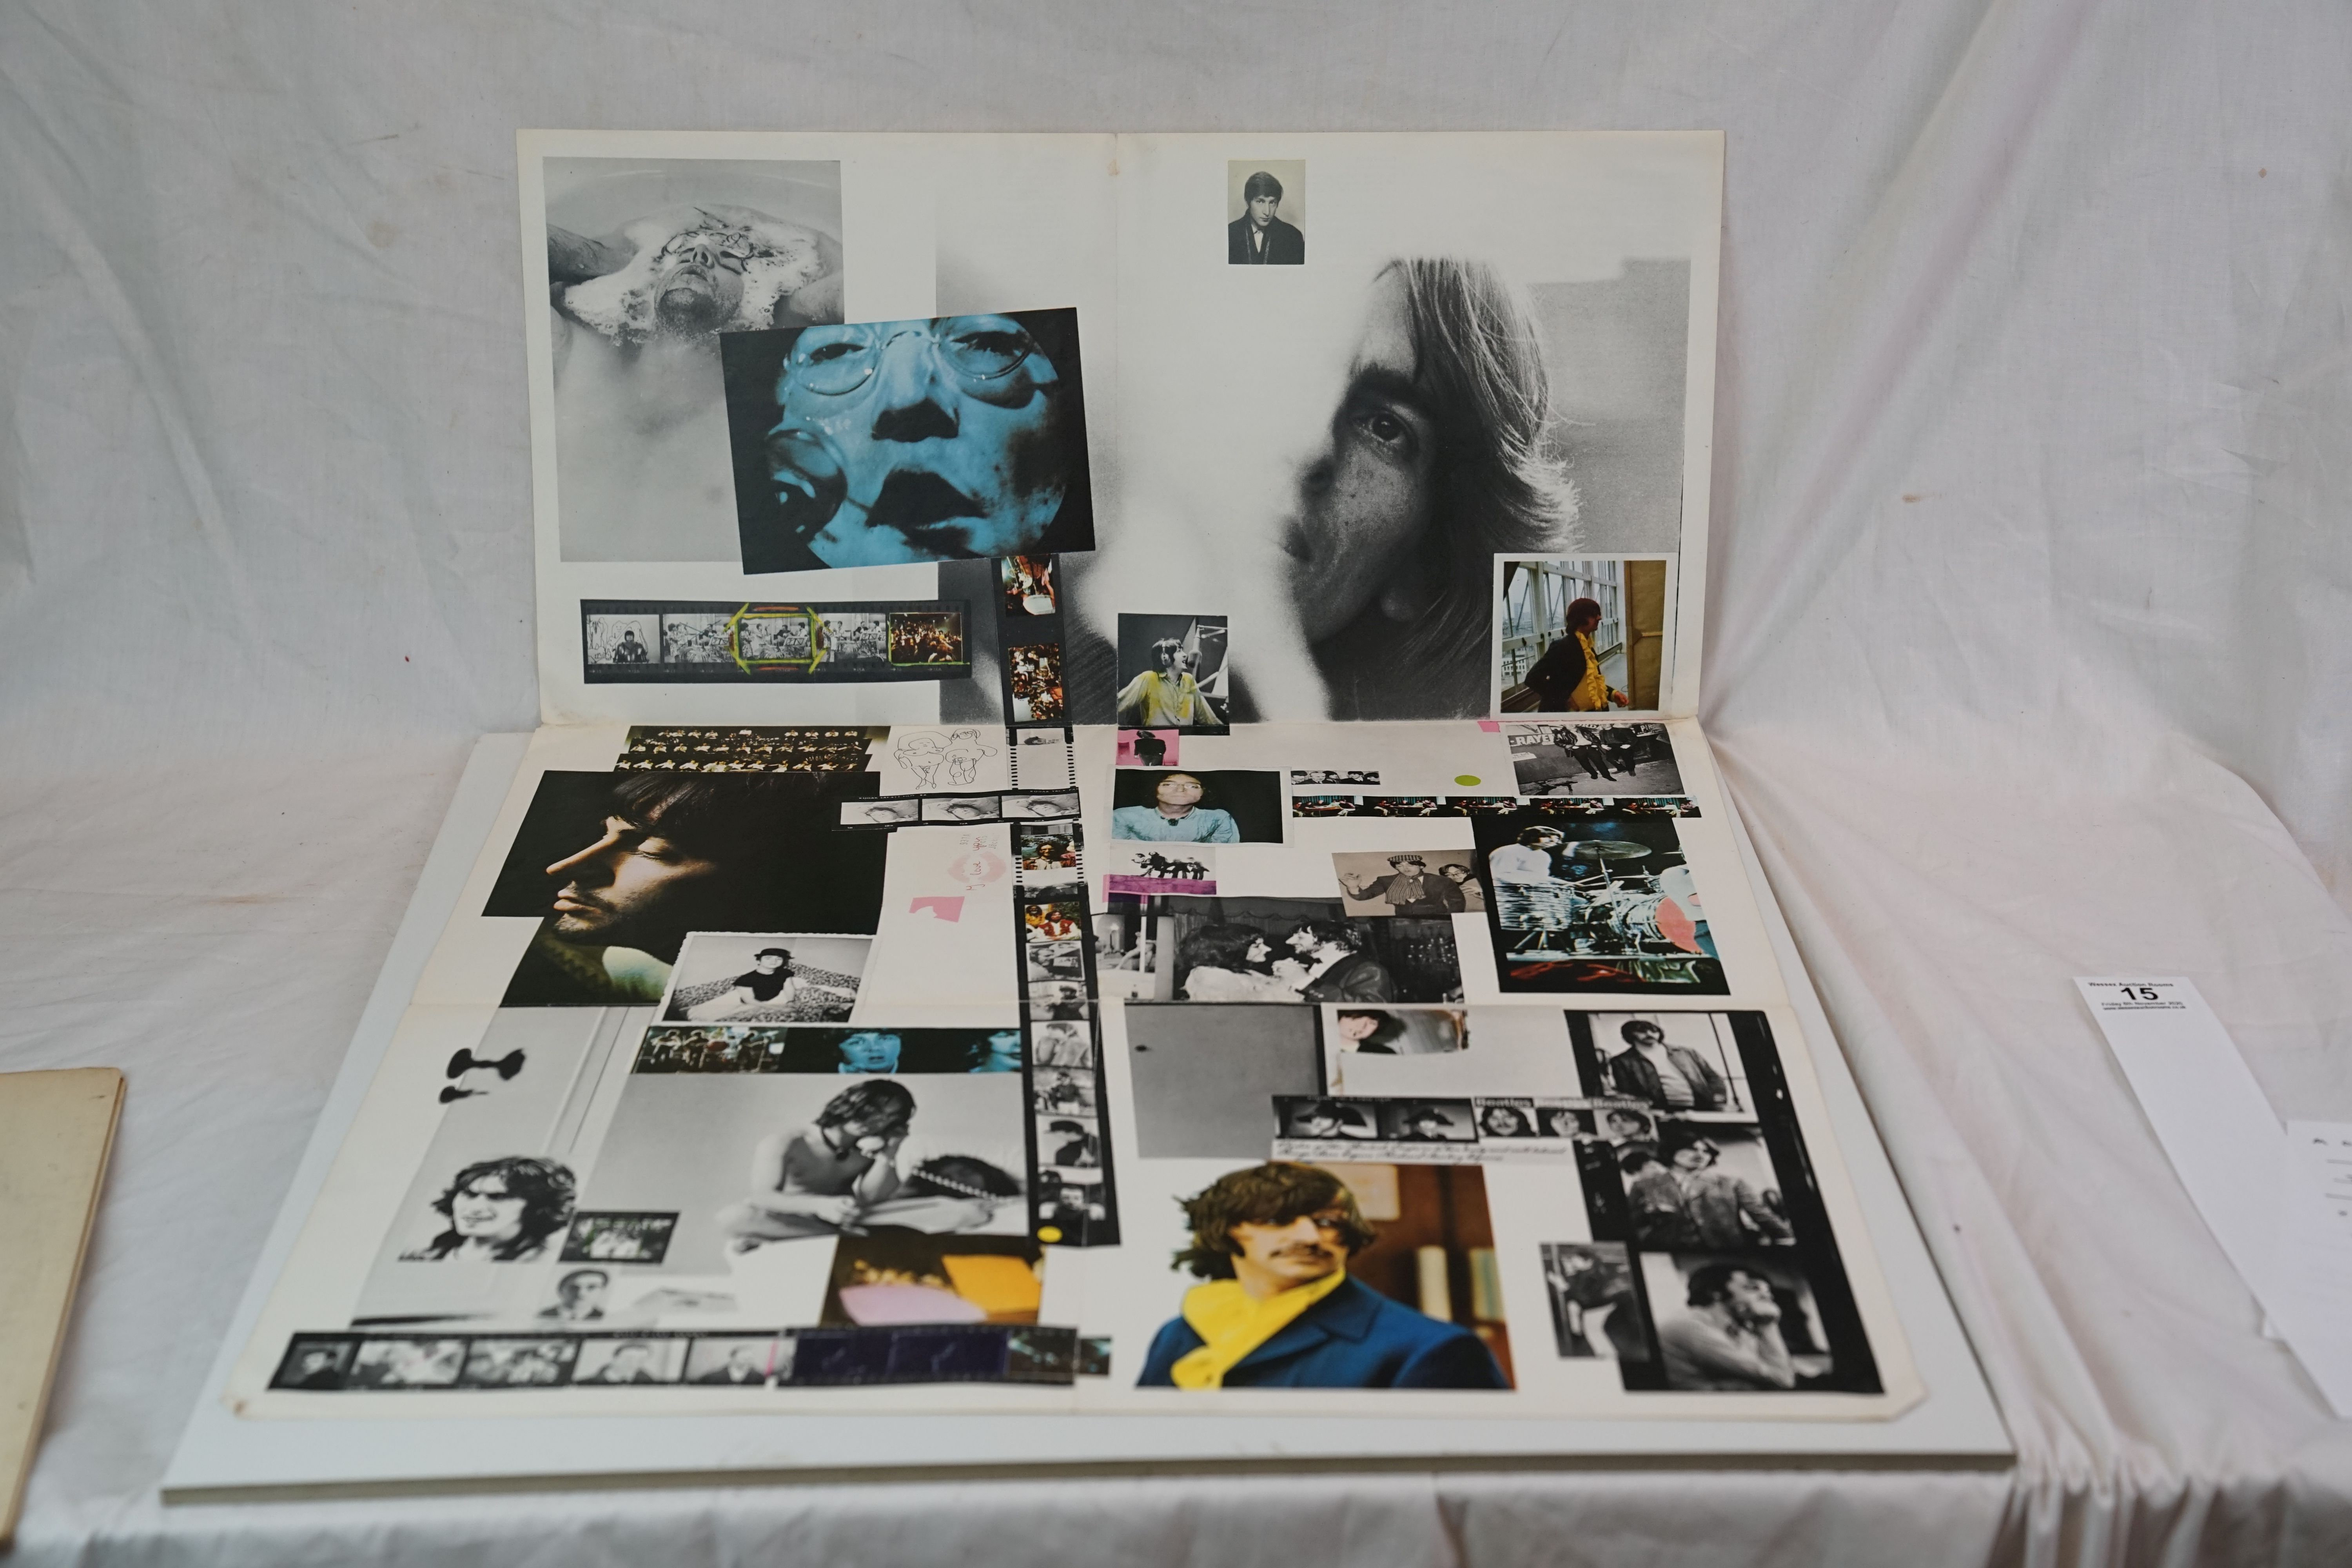 Vinyl - The Beatles White Album (PCS 706718) Stereo top loader No 0399149, three photos (Lennon - Image 12 of 14